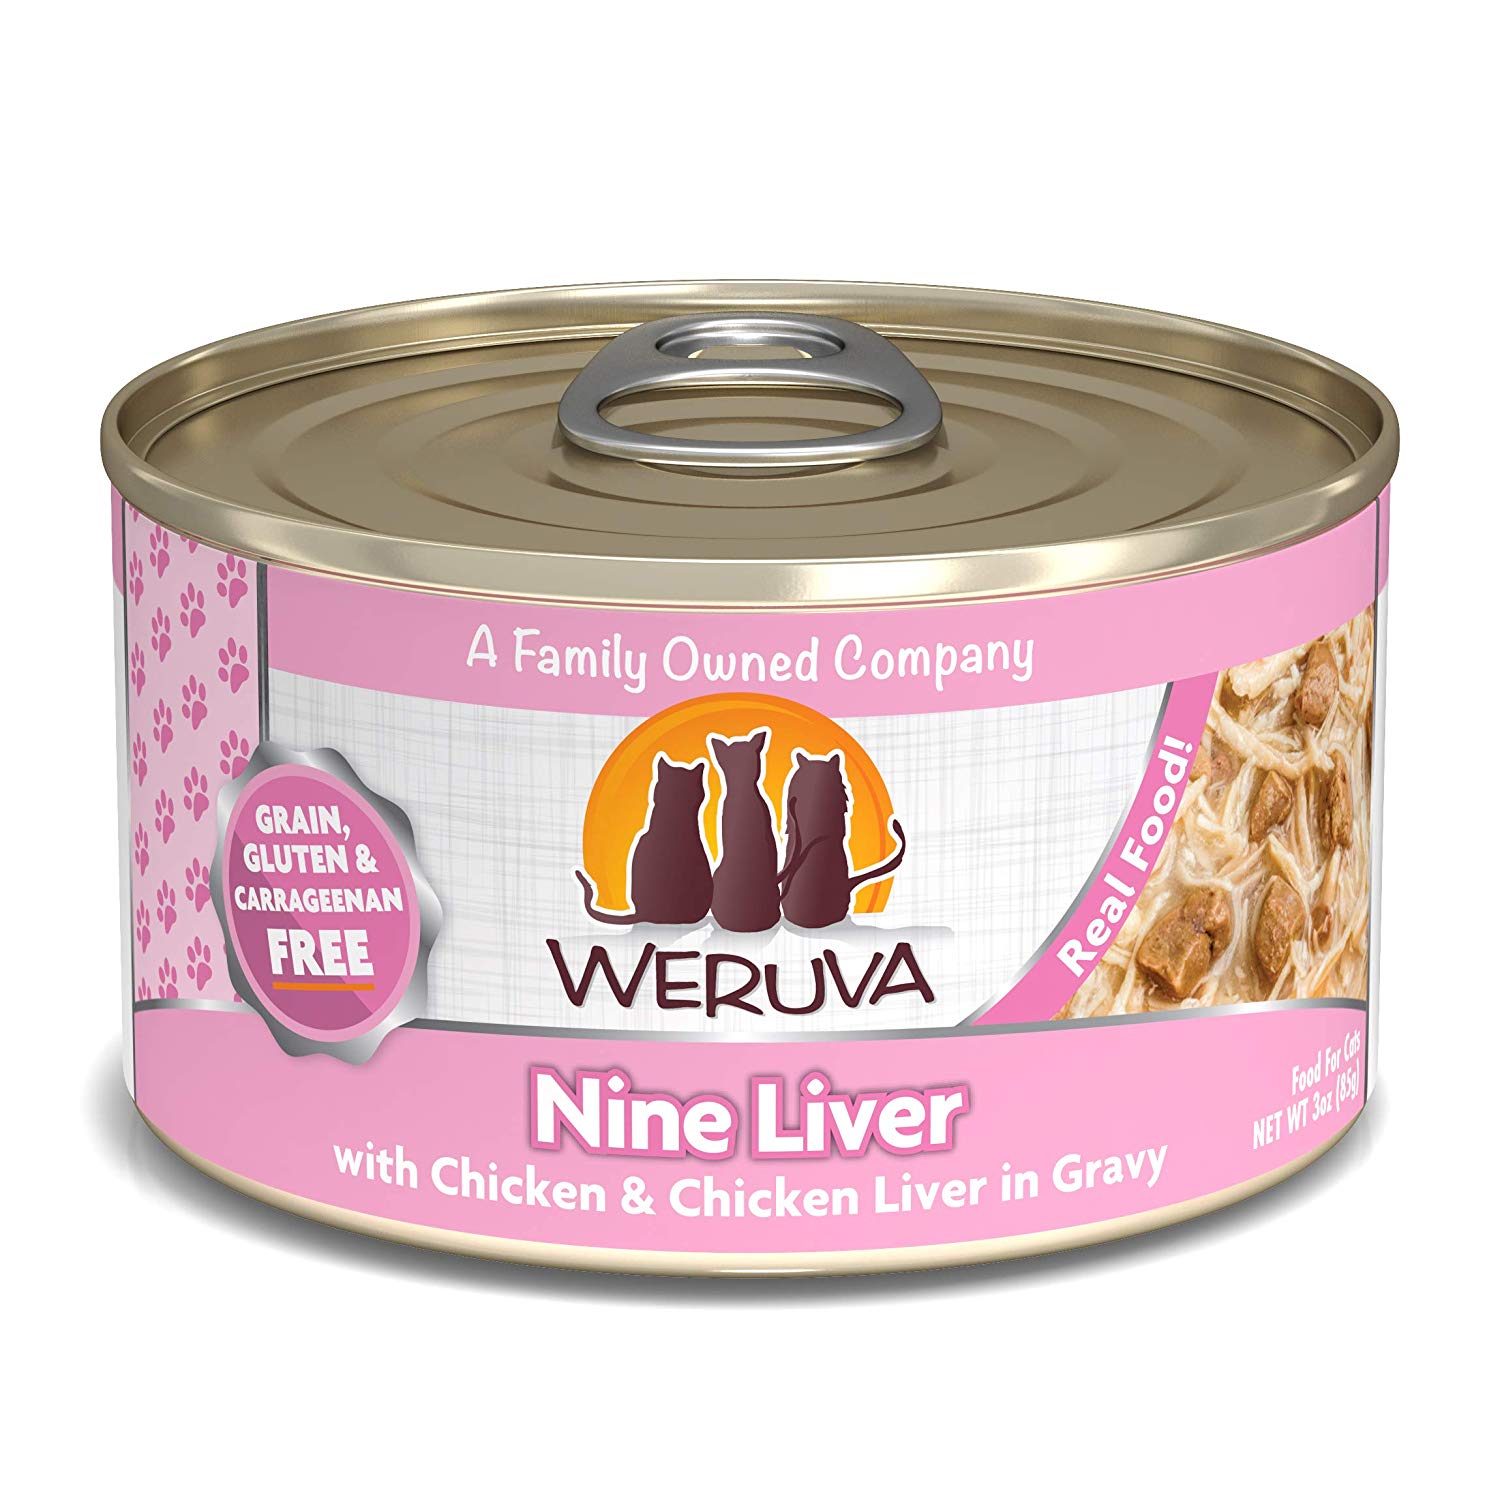 唯美味主食貓罐-香雞燉滑肝
WERUVA-Nine Liver With Chicken and Chicken Liver in Gravy